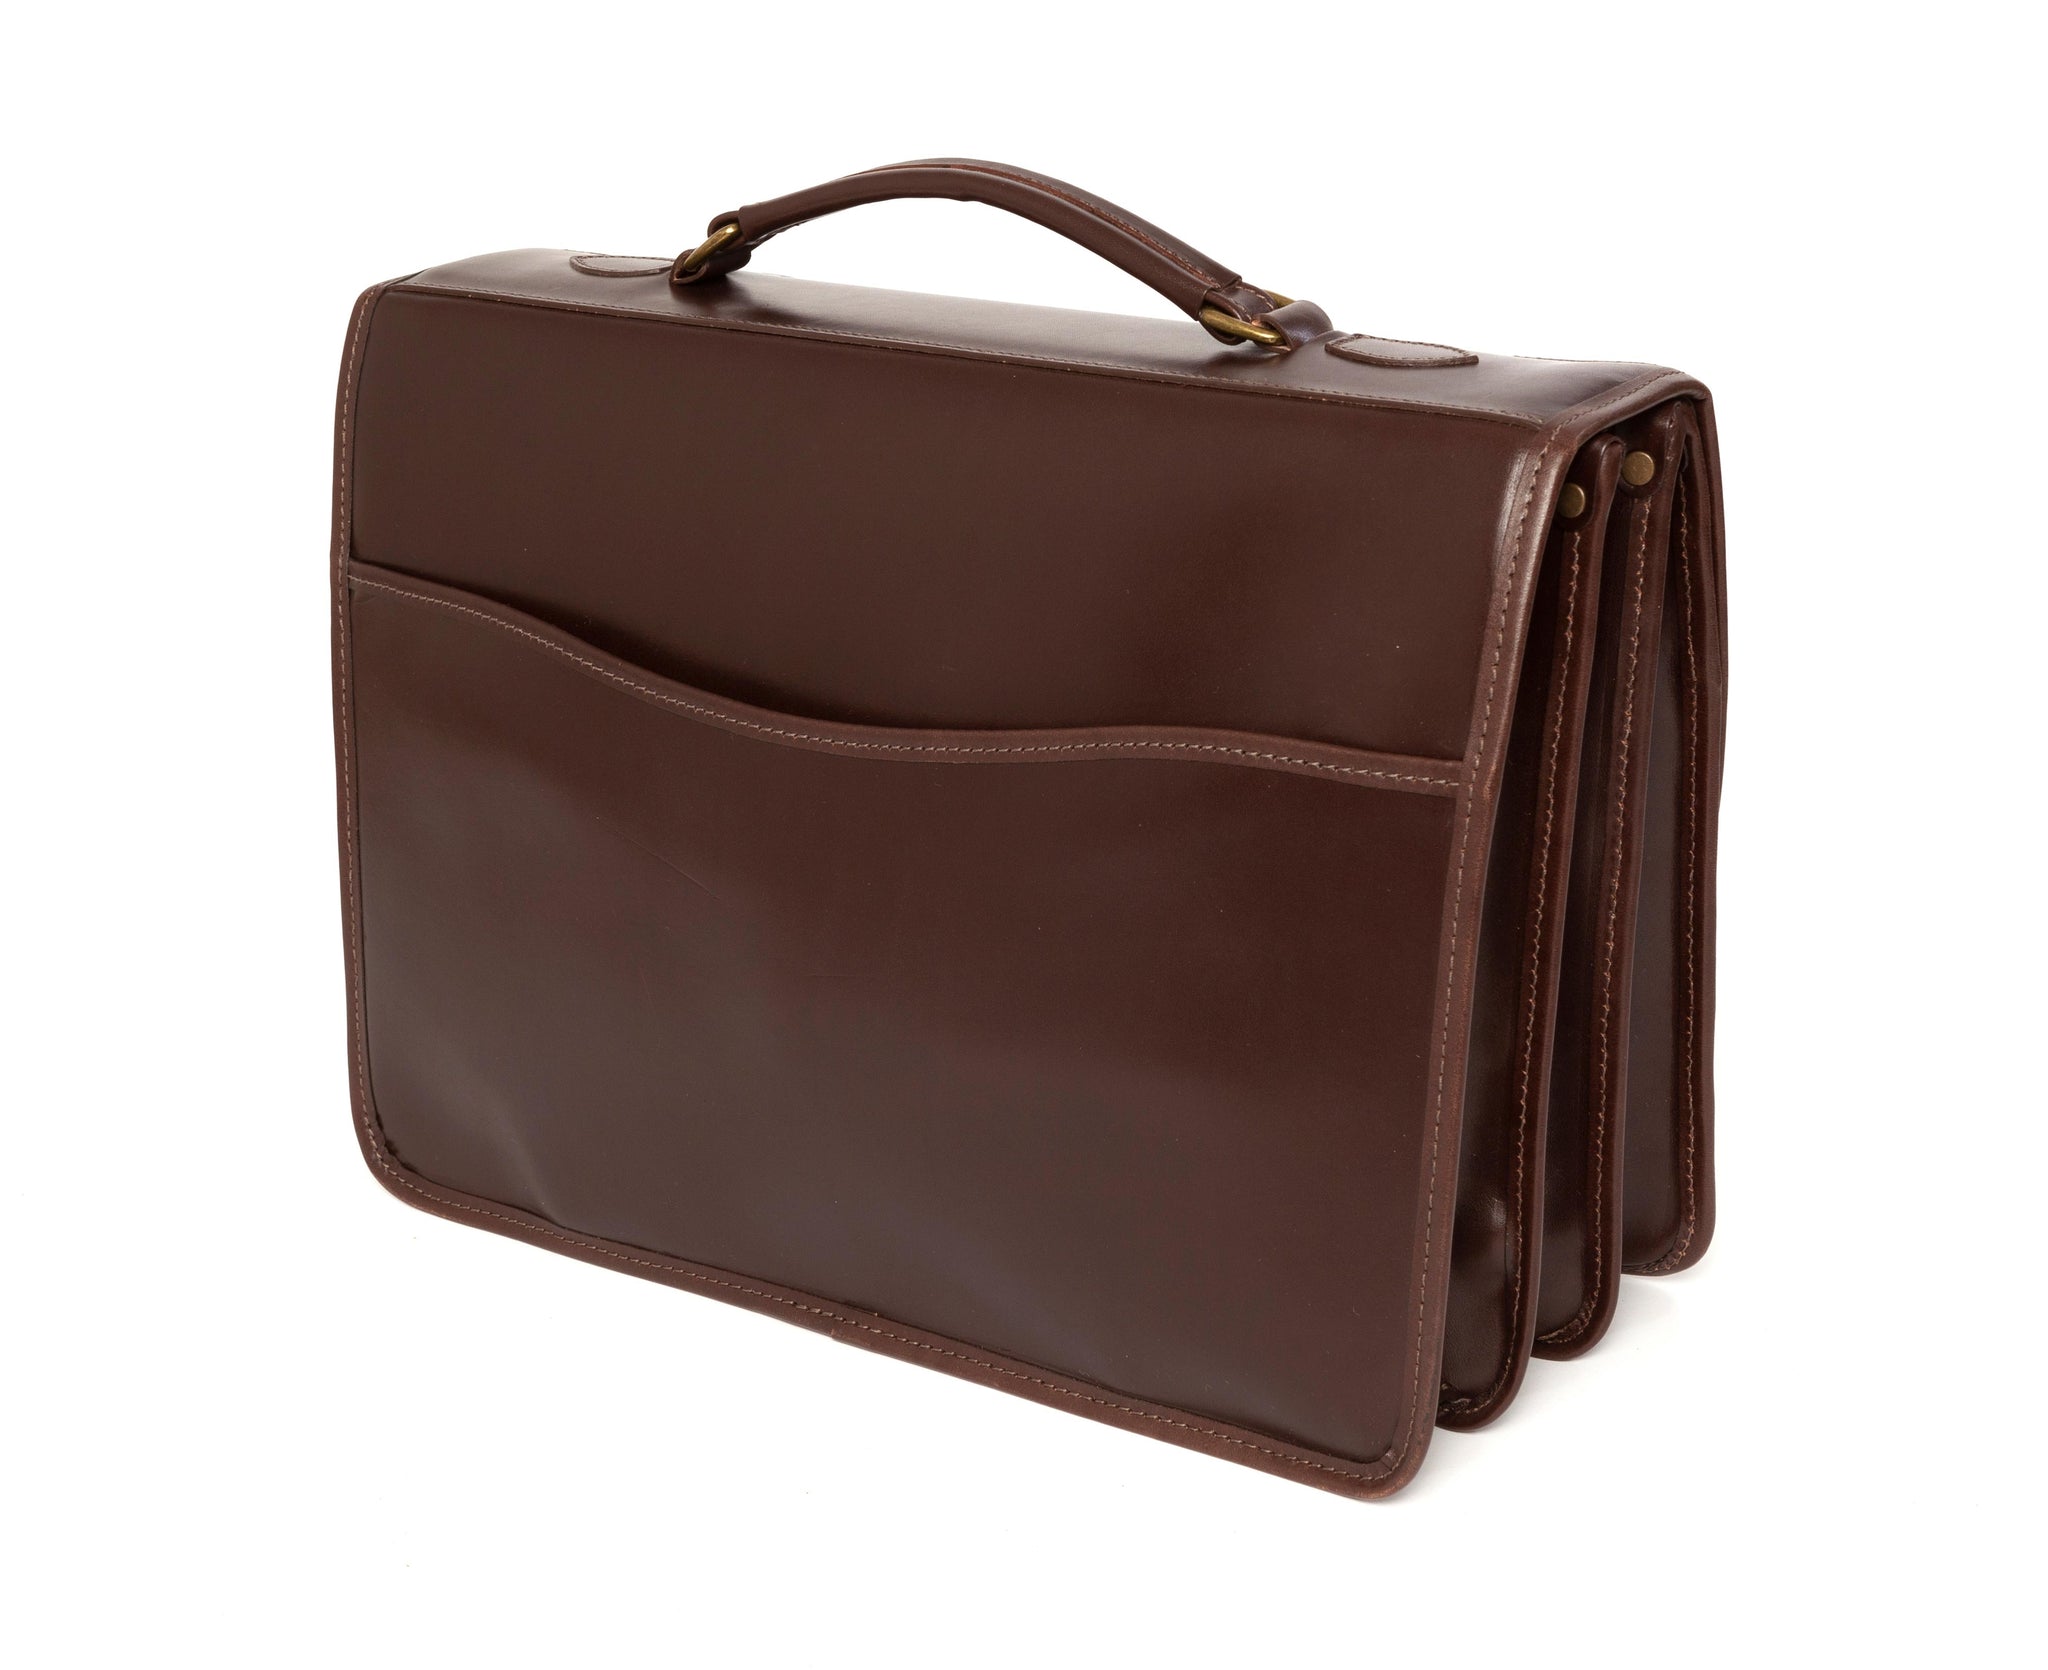 Tusting Buckingham Leather 3-Bellows Briefcase - Dark Brown Miret Bridle - Regent Tailoring